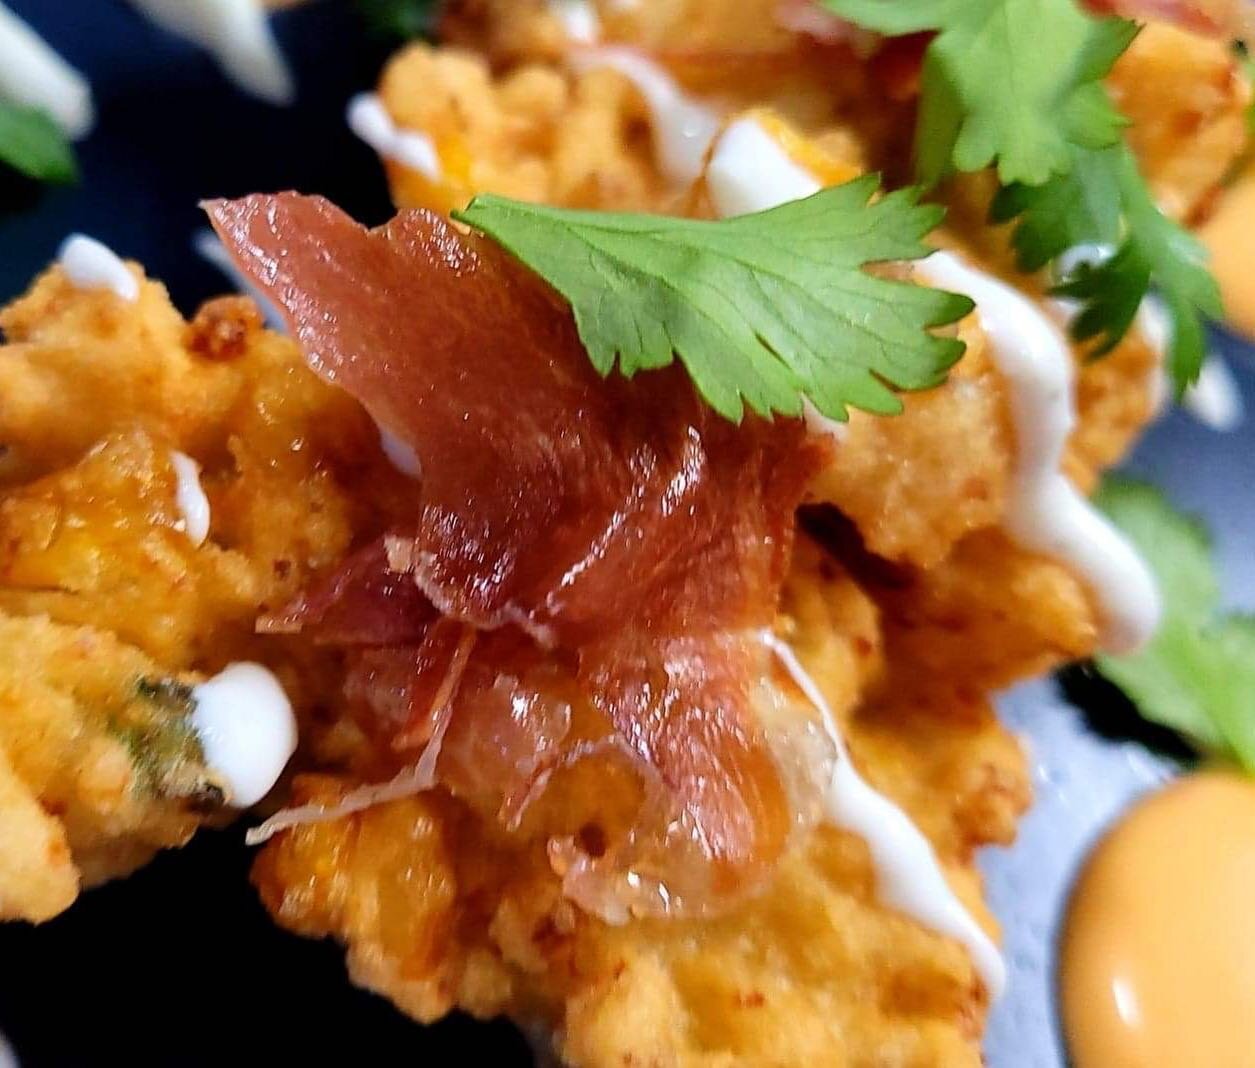 Shrimp &amp; Corn Fritters today @tusketfallsbrewing 🌽🍤 ! Served with chive crema and bang bang sauce 💥 #noms #cajun